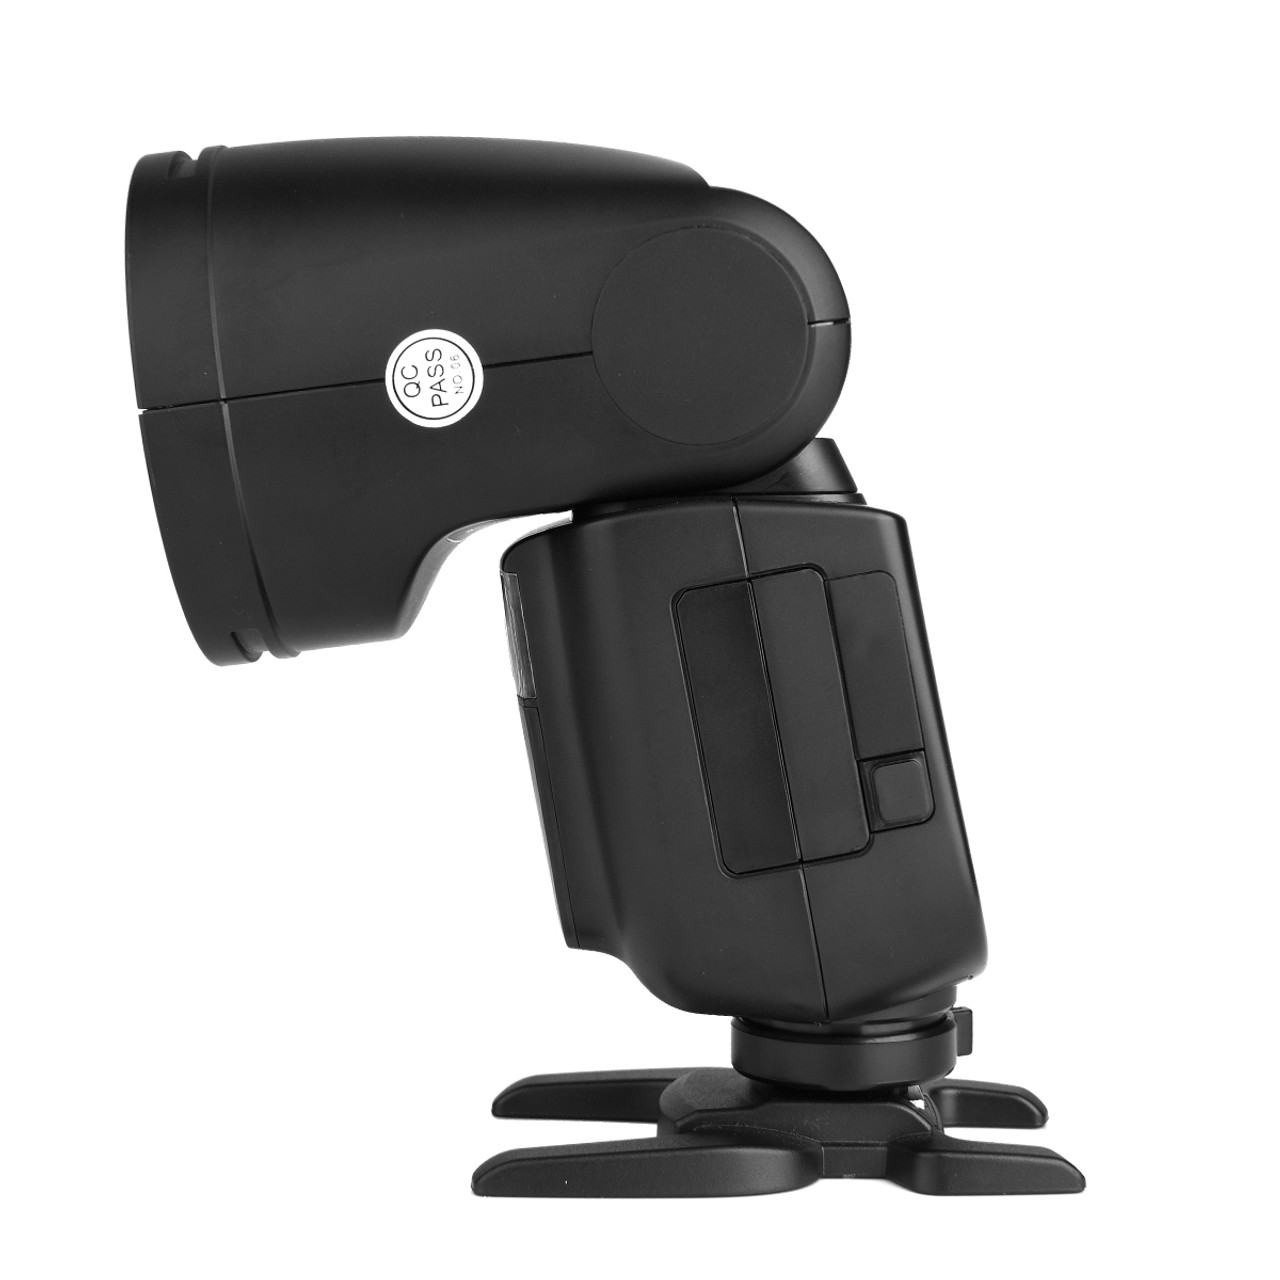 Godox V1-S TTL Round Head Camera Flash Speedlight with Godox AK-R1  Accessories Kit for Sony Camera, 2.4G HSS Speedlite, 2600mAh Li-ion Battery  1.5